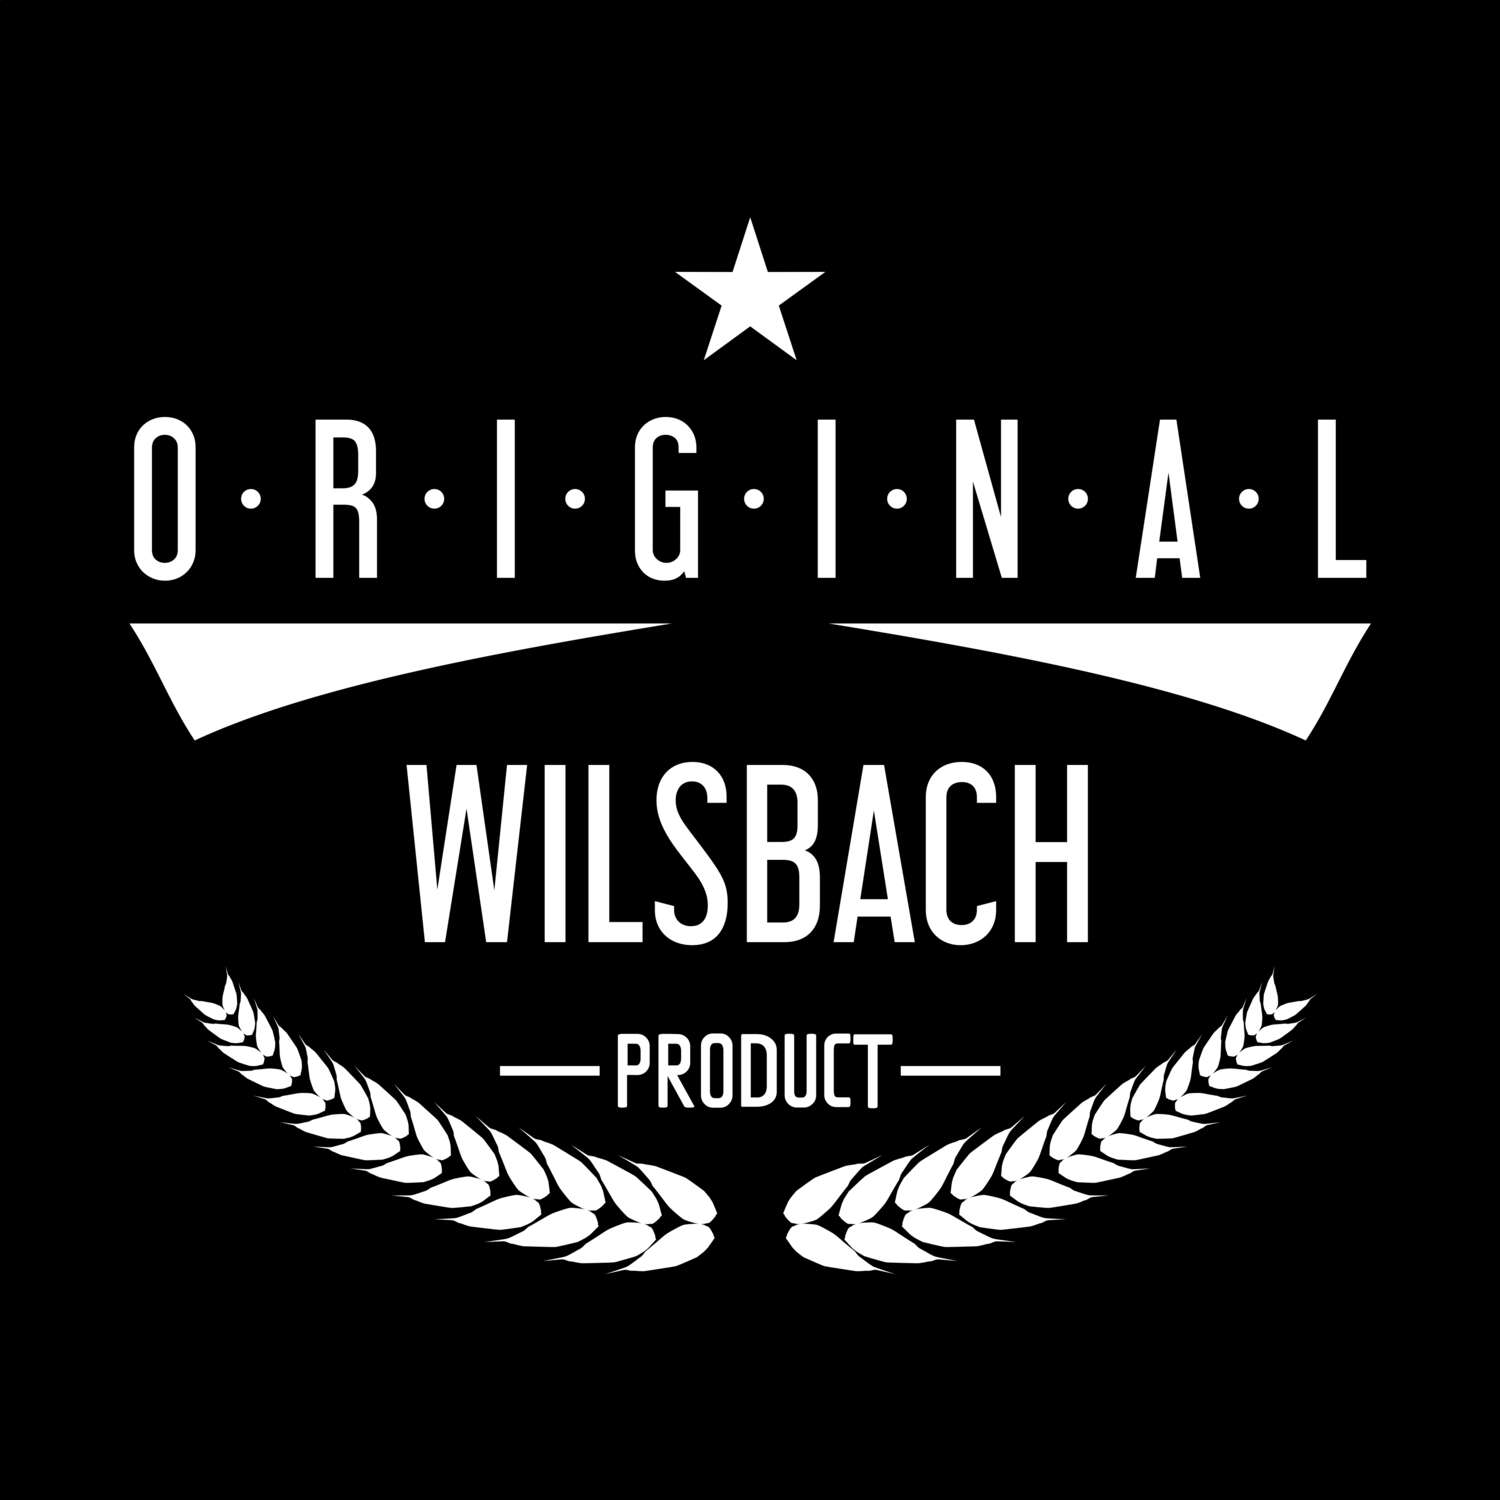 Wilsbach T-Shirt »Original Product«